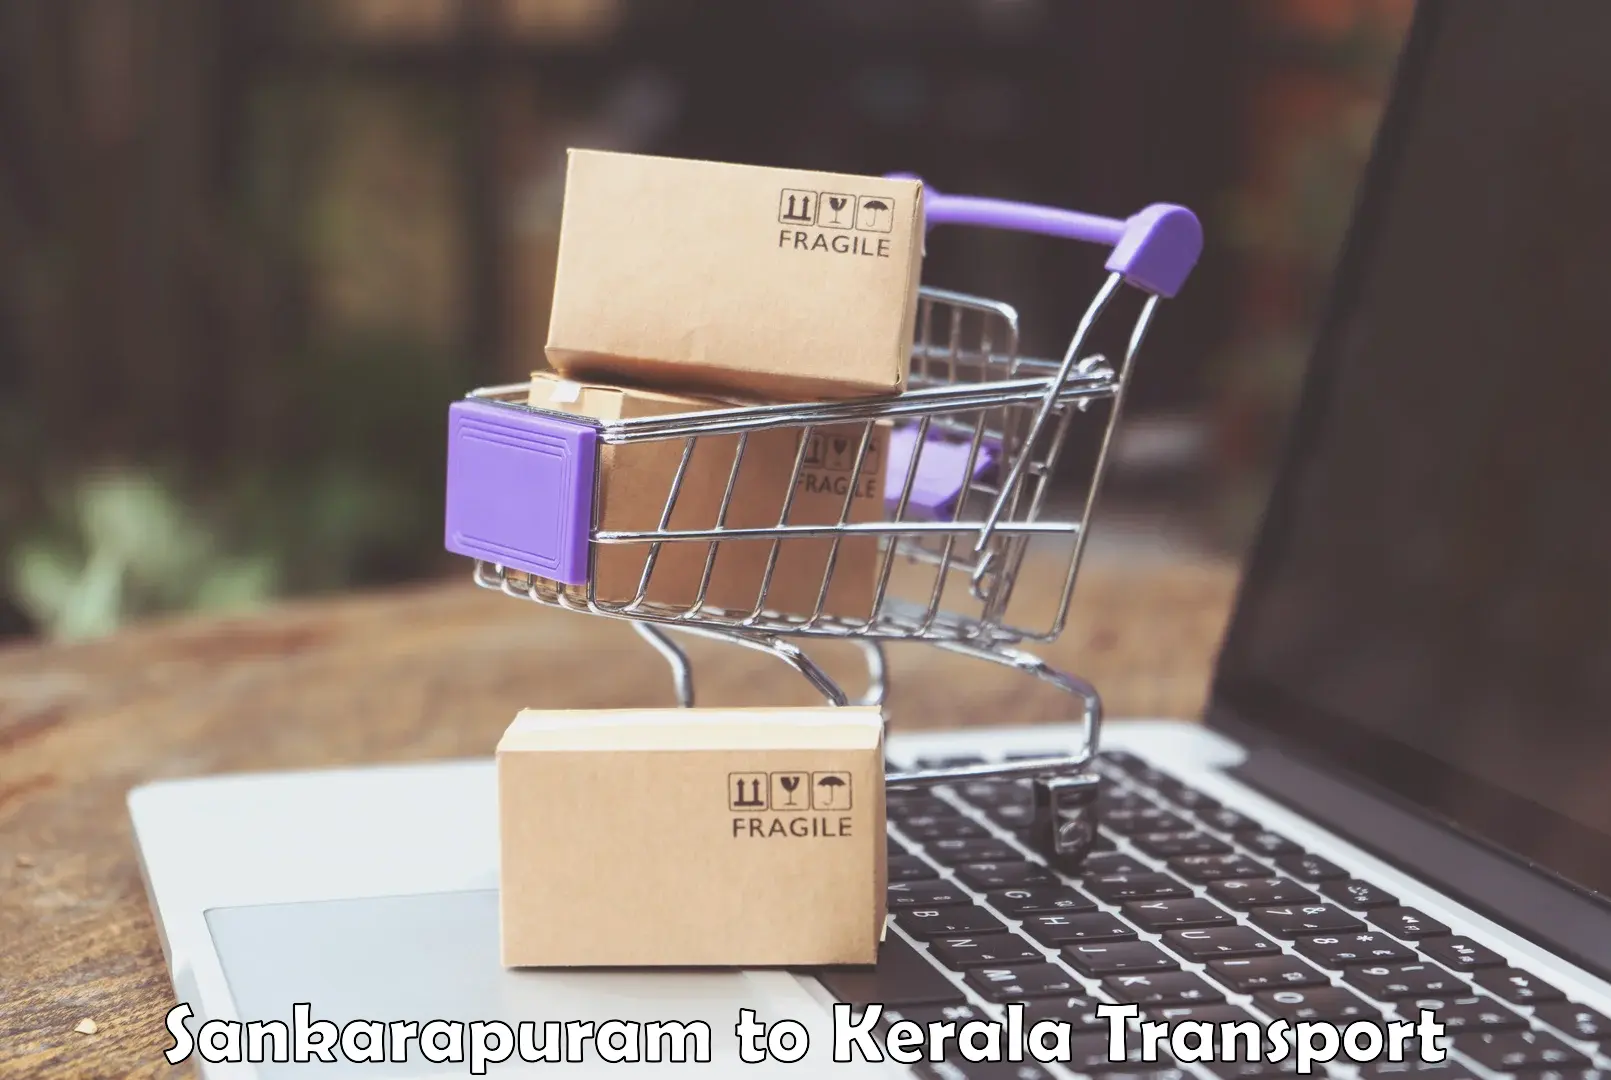 Online transport booking Sankarapuram to Kochi